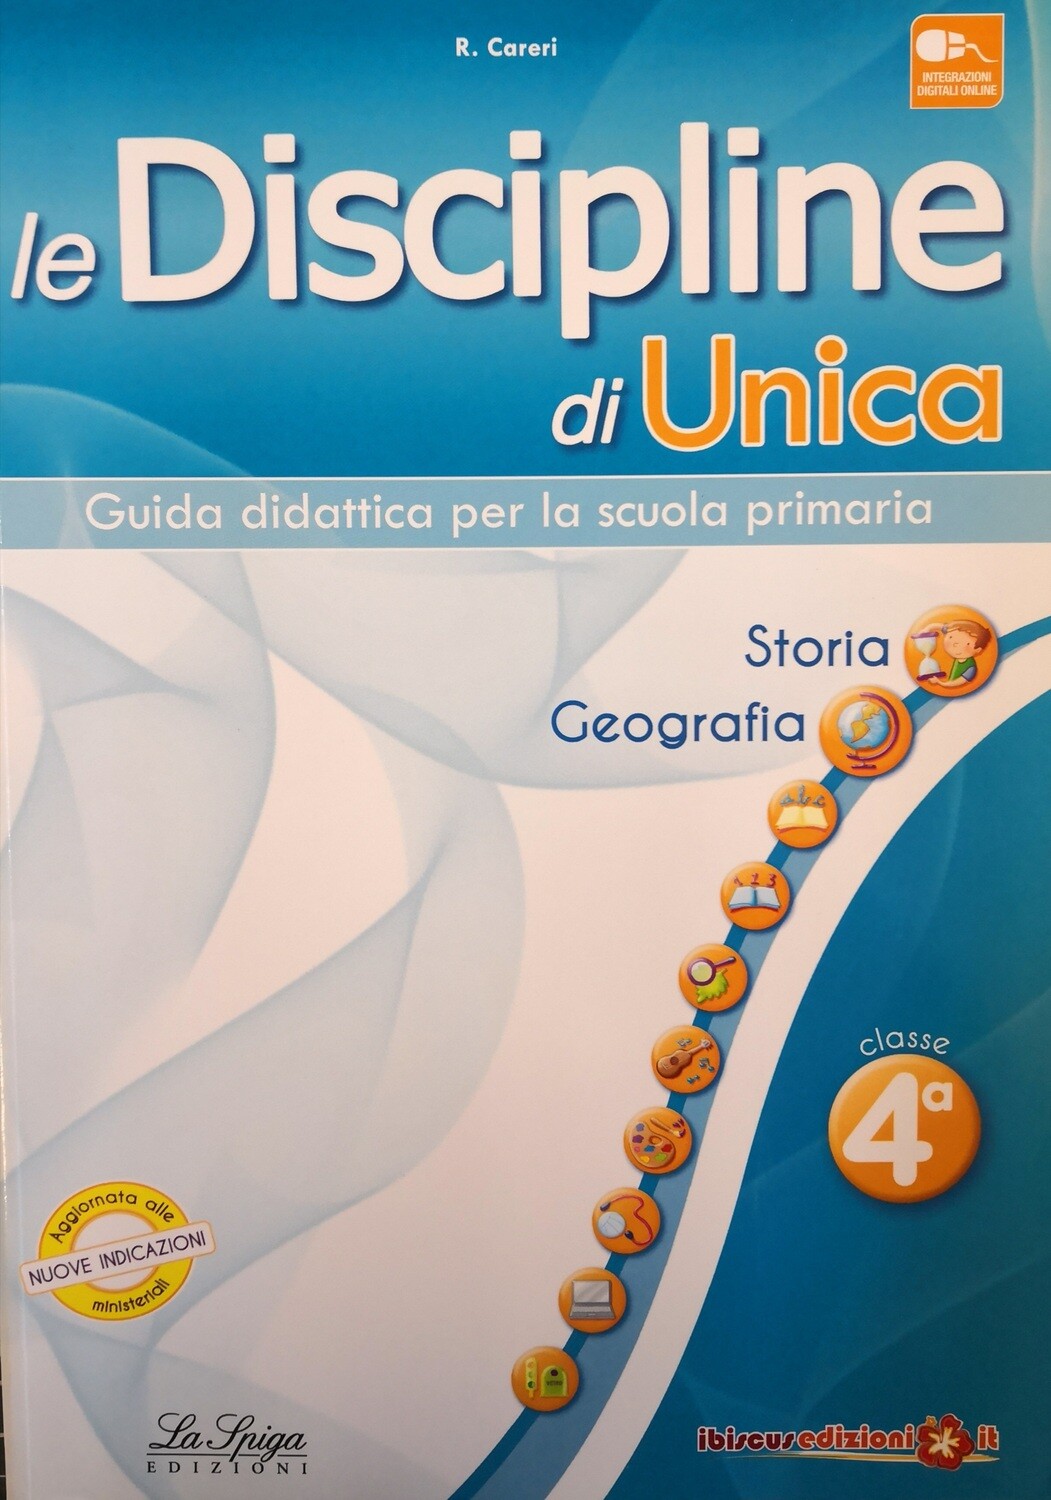 GUIDA UNICA STORIA E GEOGRAFIA CLASSE 4